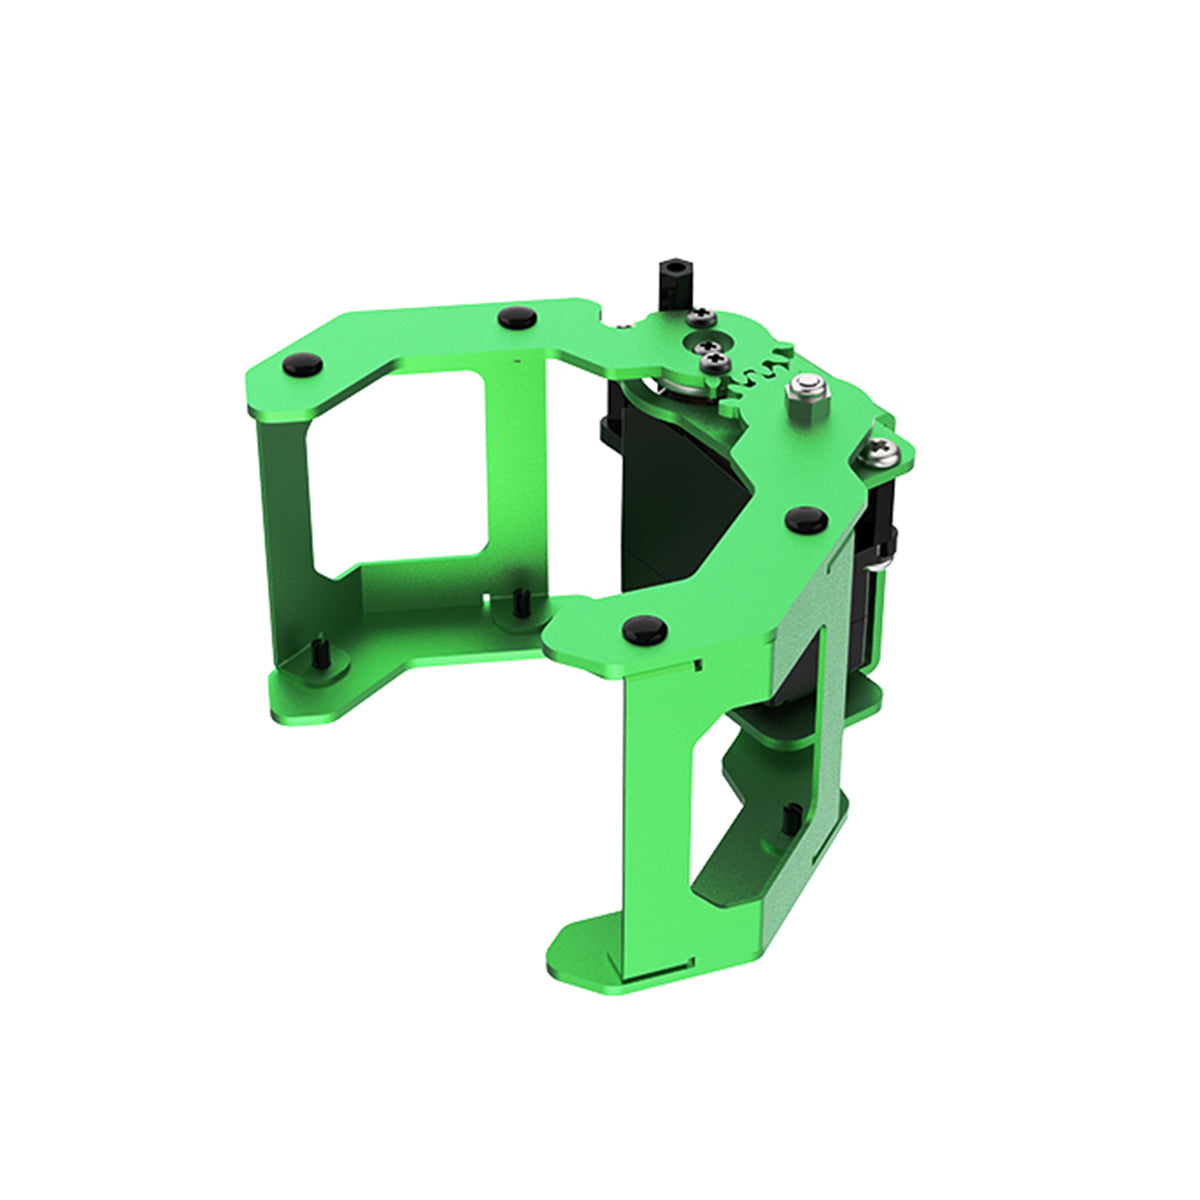 Hiwonder Green Robot Gripper Aluminium Alloy Flexible Opening and Closing for Robotic Arm